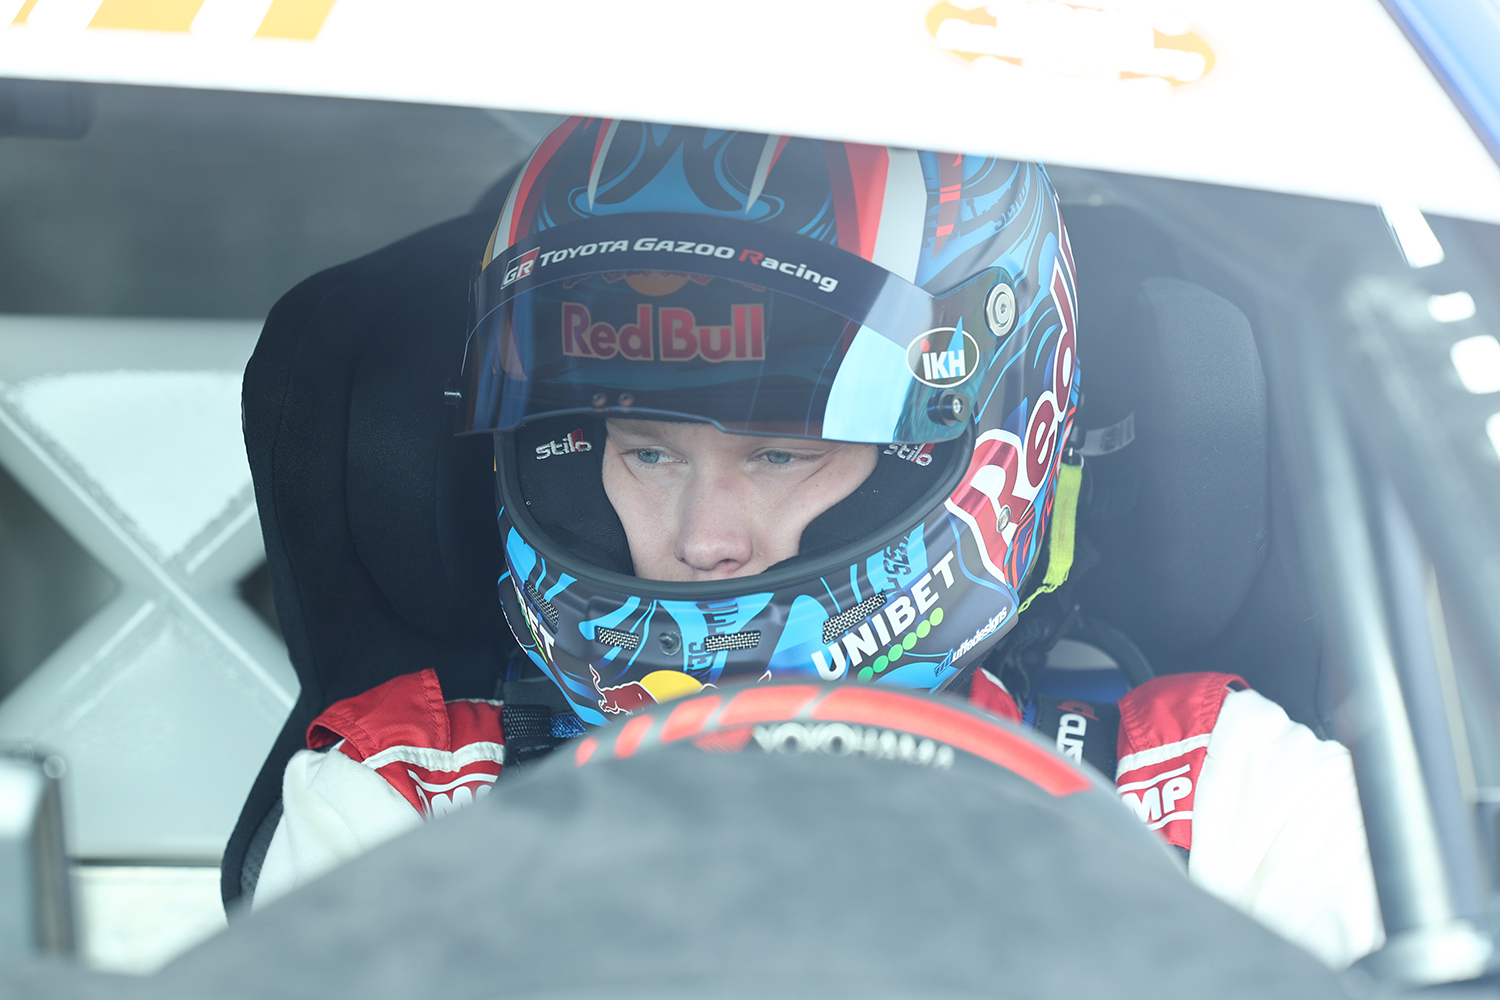 KR69 CUSCO Racing「Red Bull GR COROLLA」を運転するカッレ・ロバンペラ選手